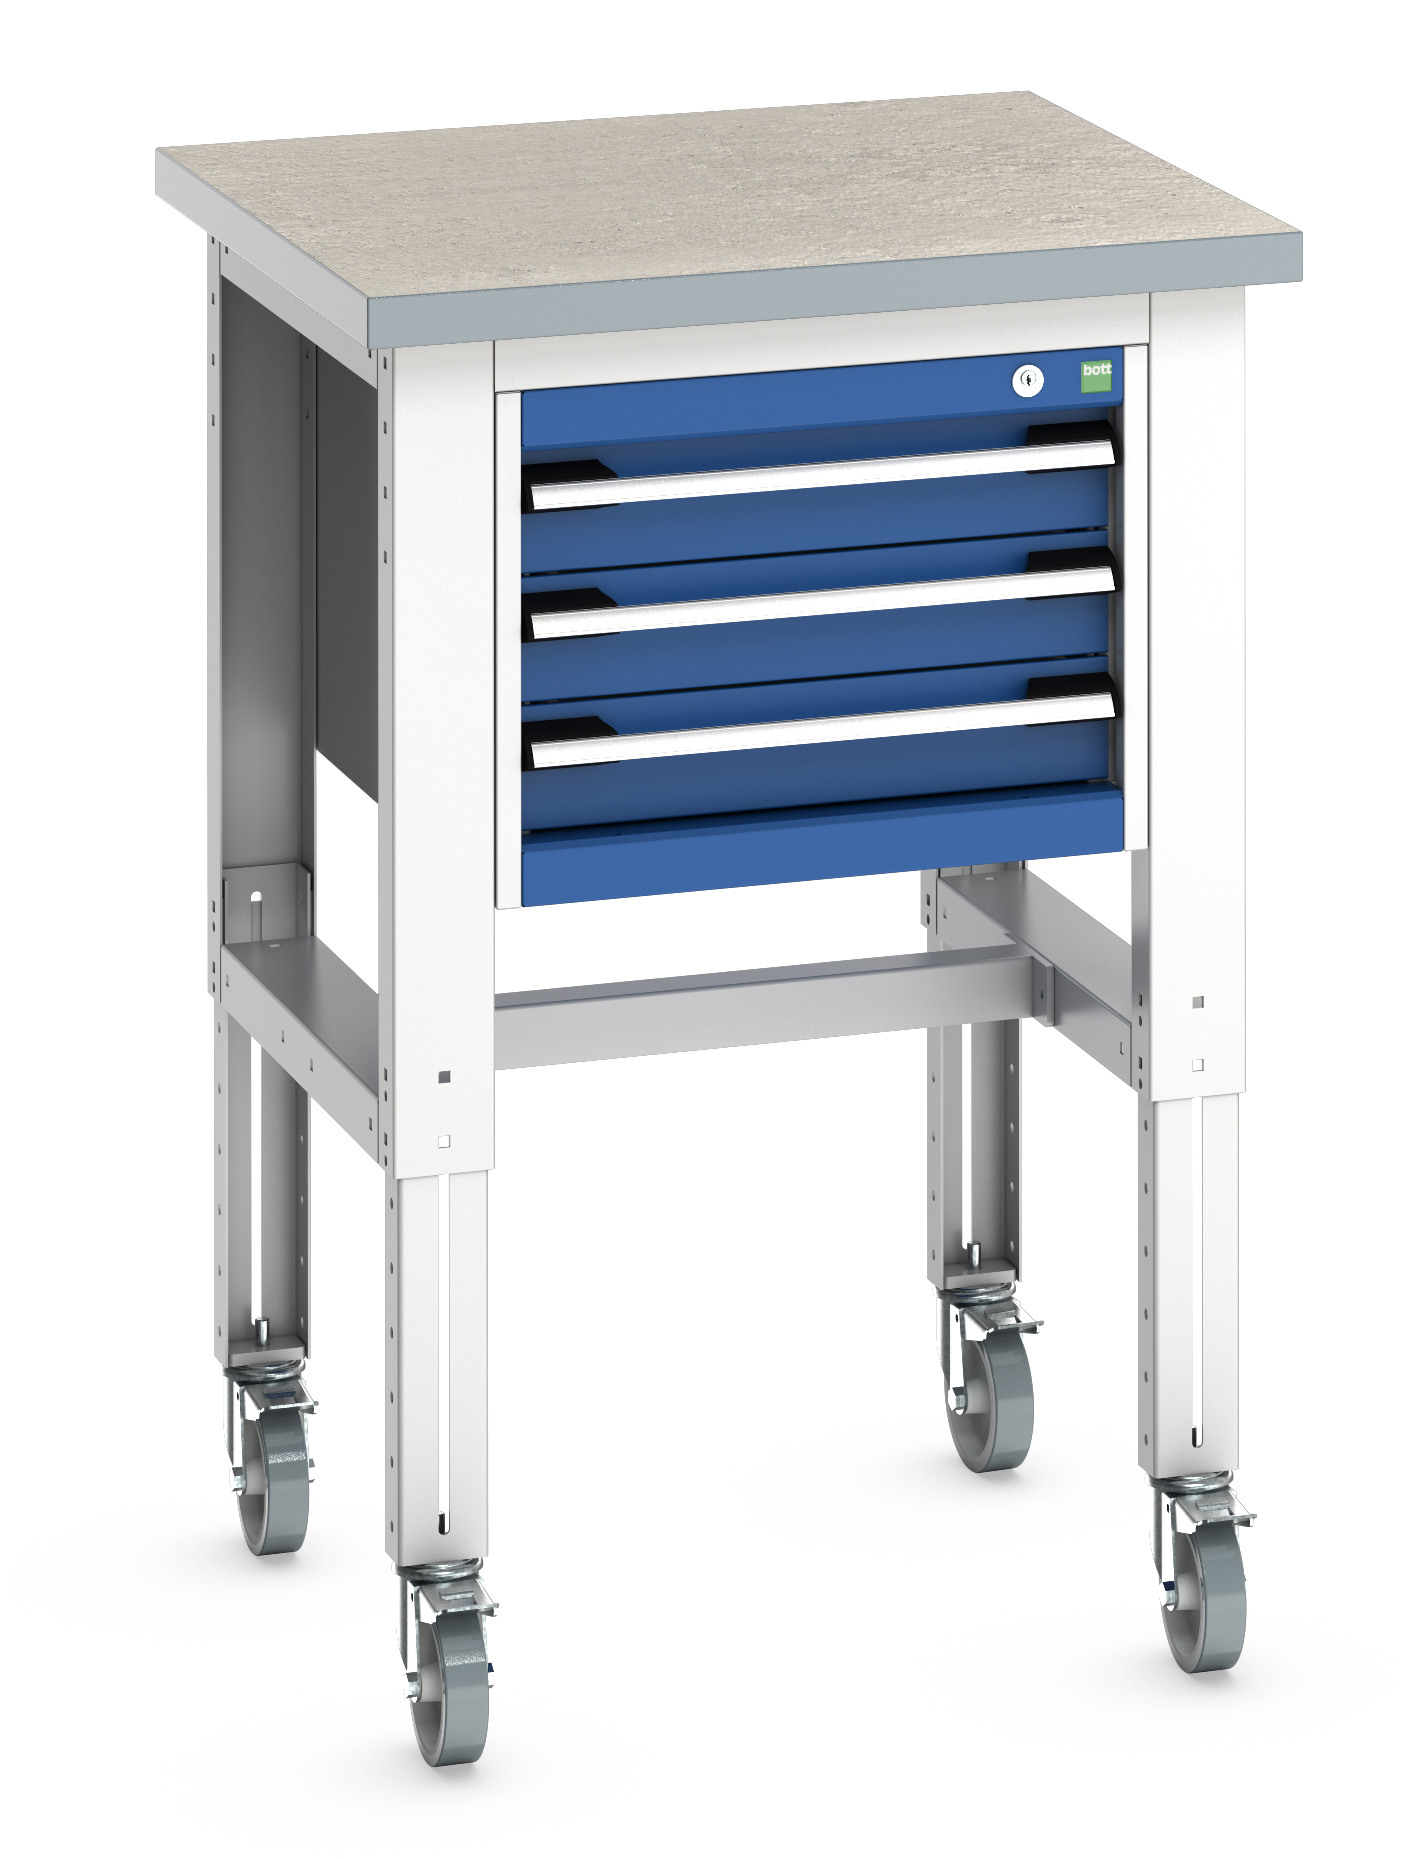 Bott Cubio Adjustable Height Mobile Workstand With 3 Drawer Cabinet - 41003529.11V